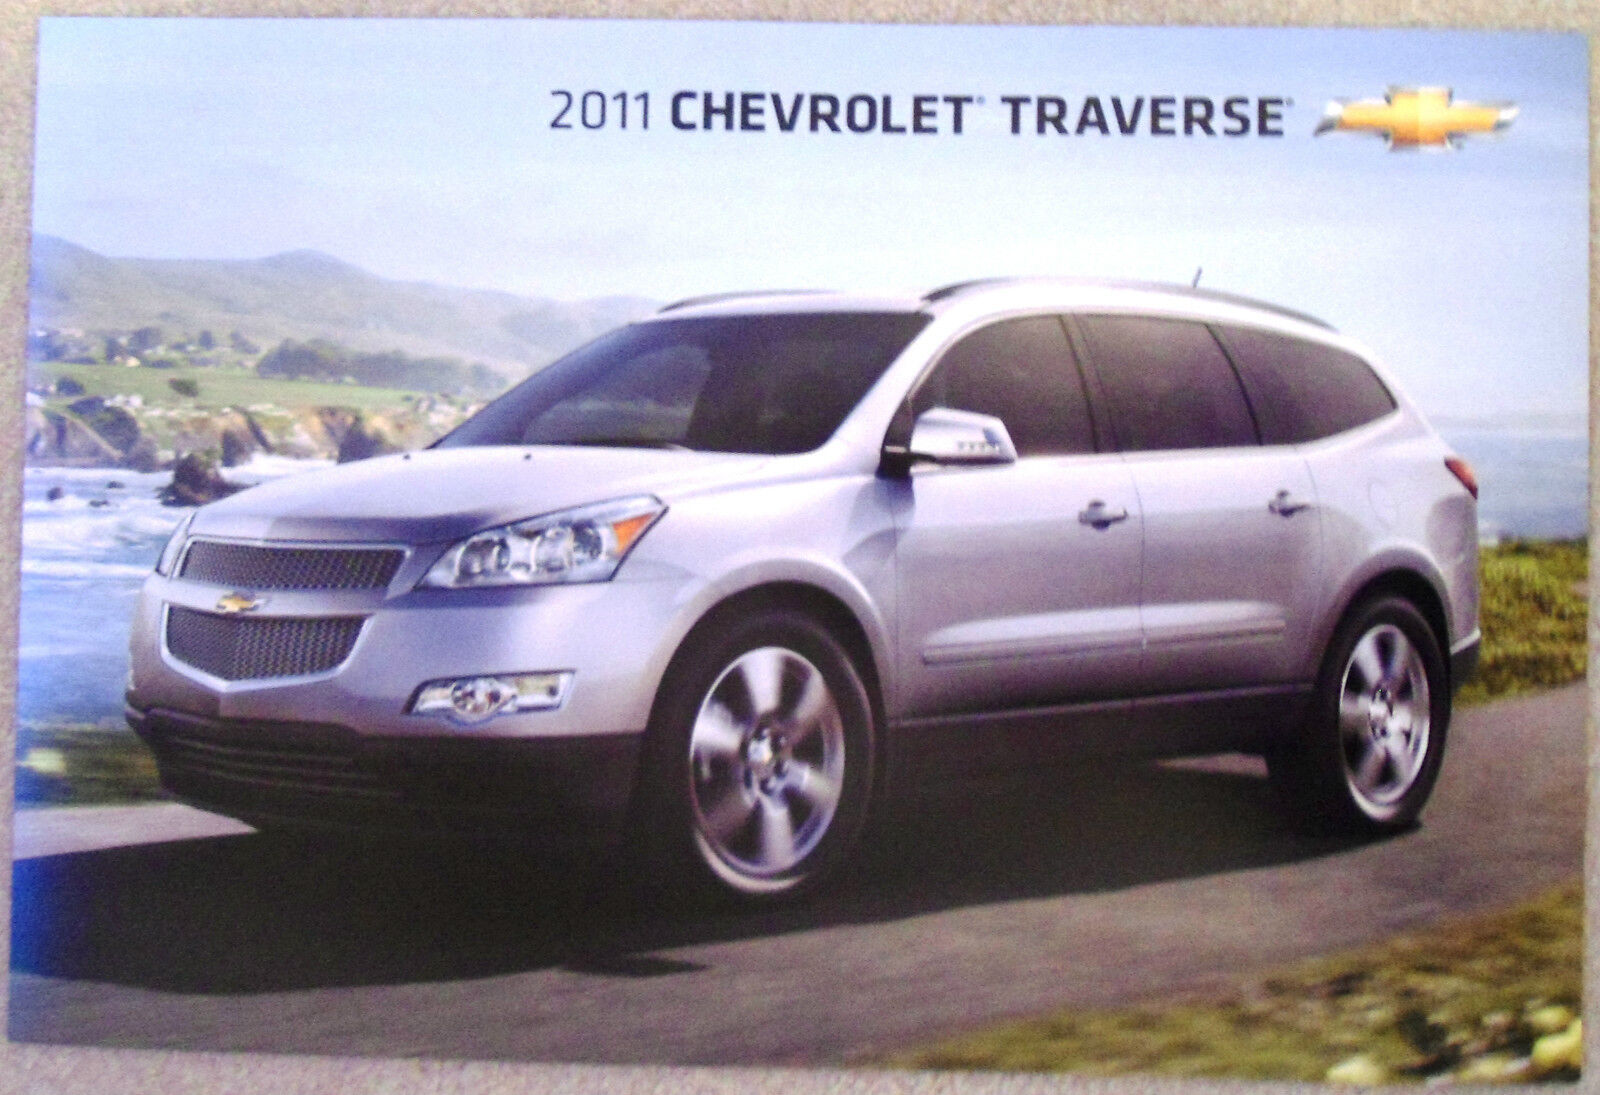 NEW GM DEALERSHIP 2011 CHEVROLET TRAVERSE AUTO POSTER OR VEHICLE PORTRAIT